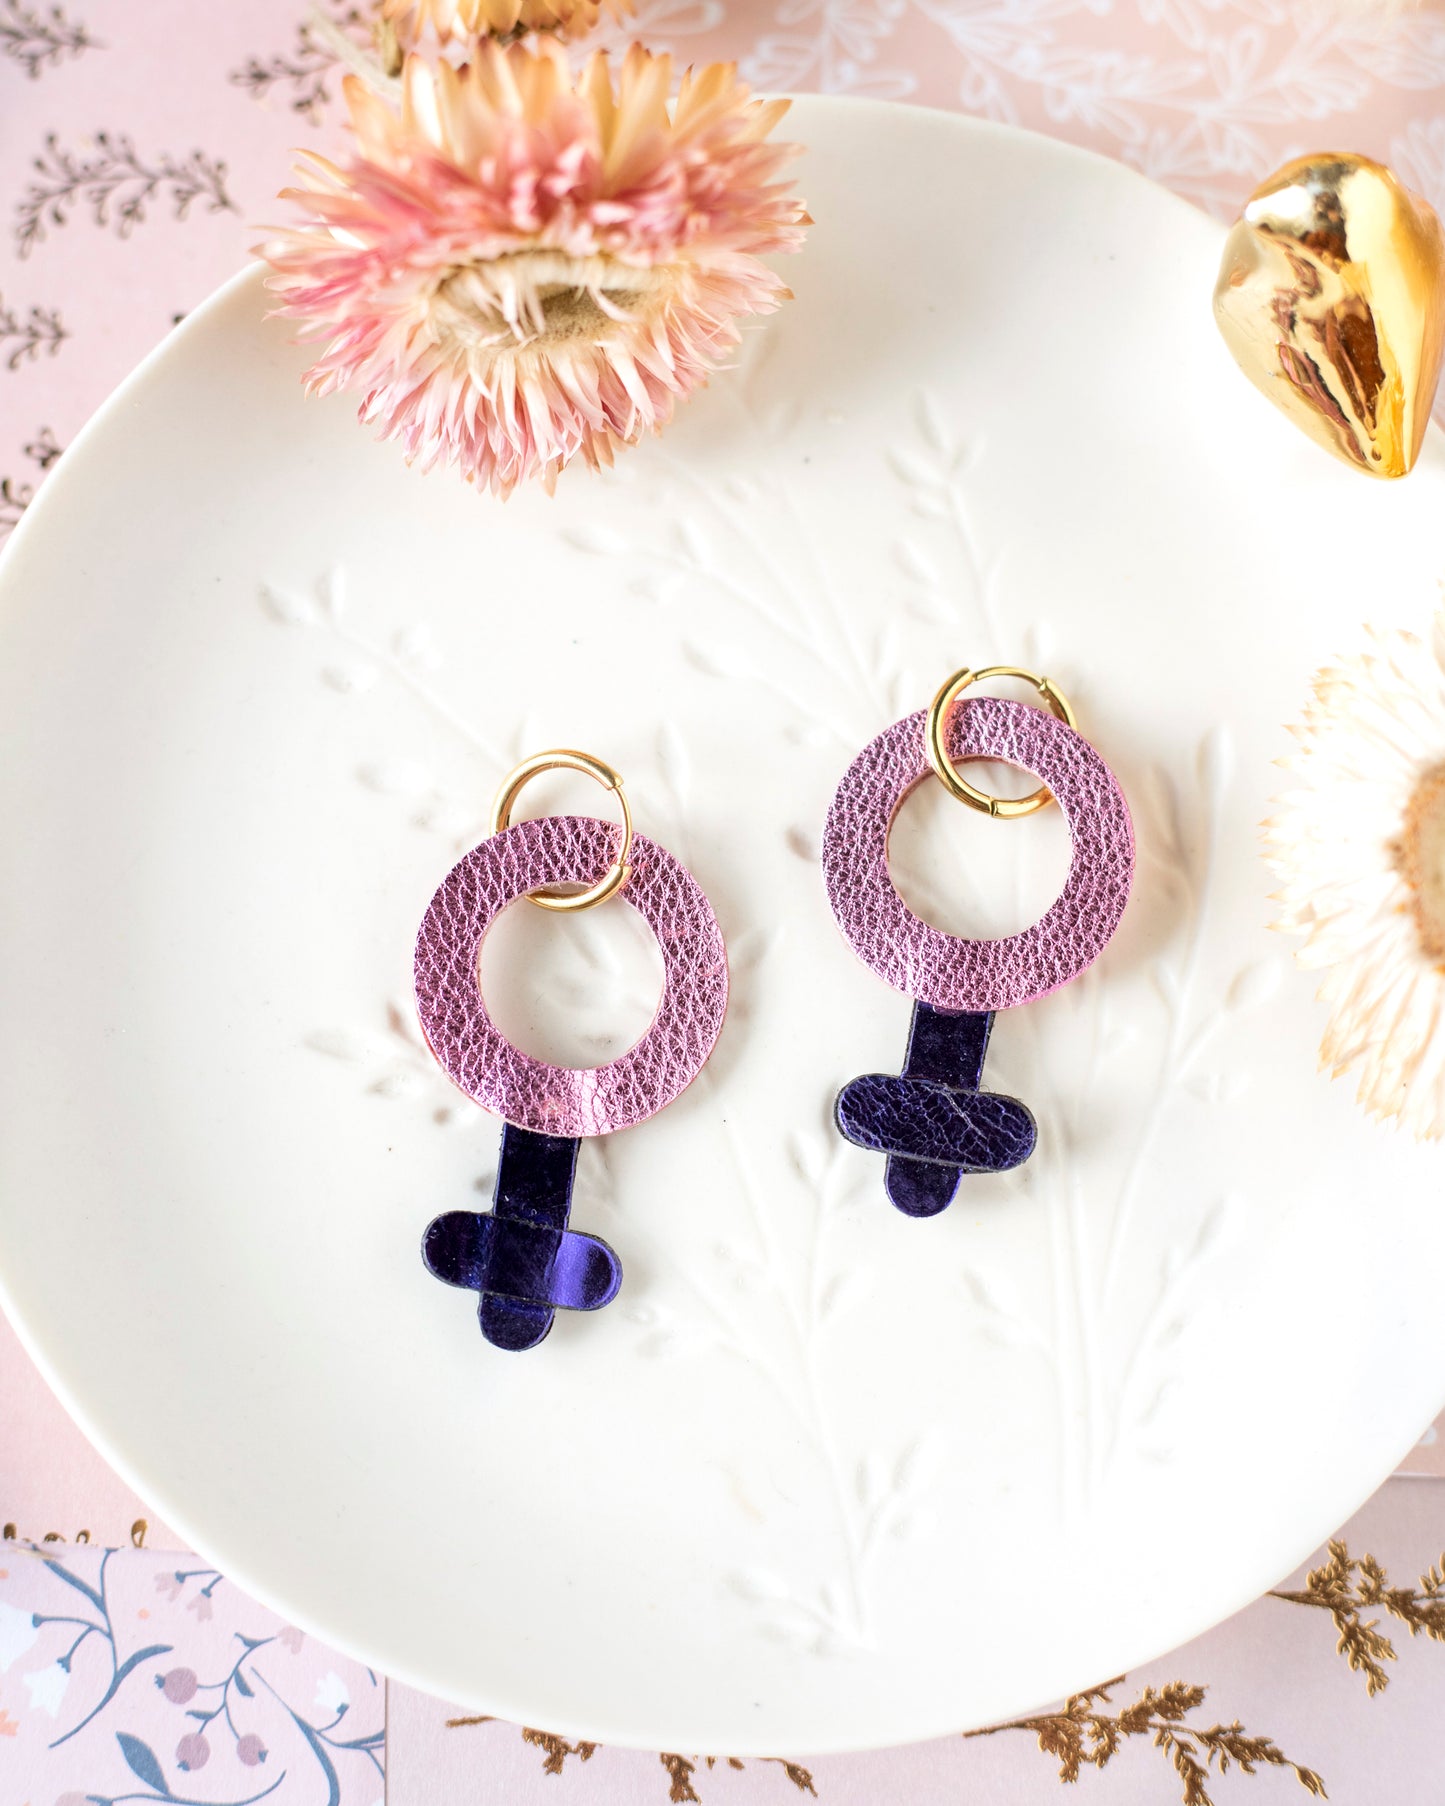 Pink and purple feminine symbol earrings